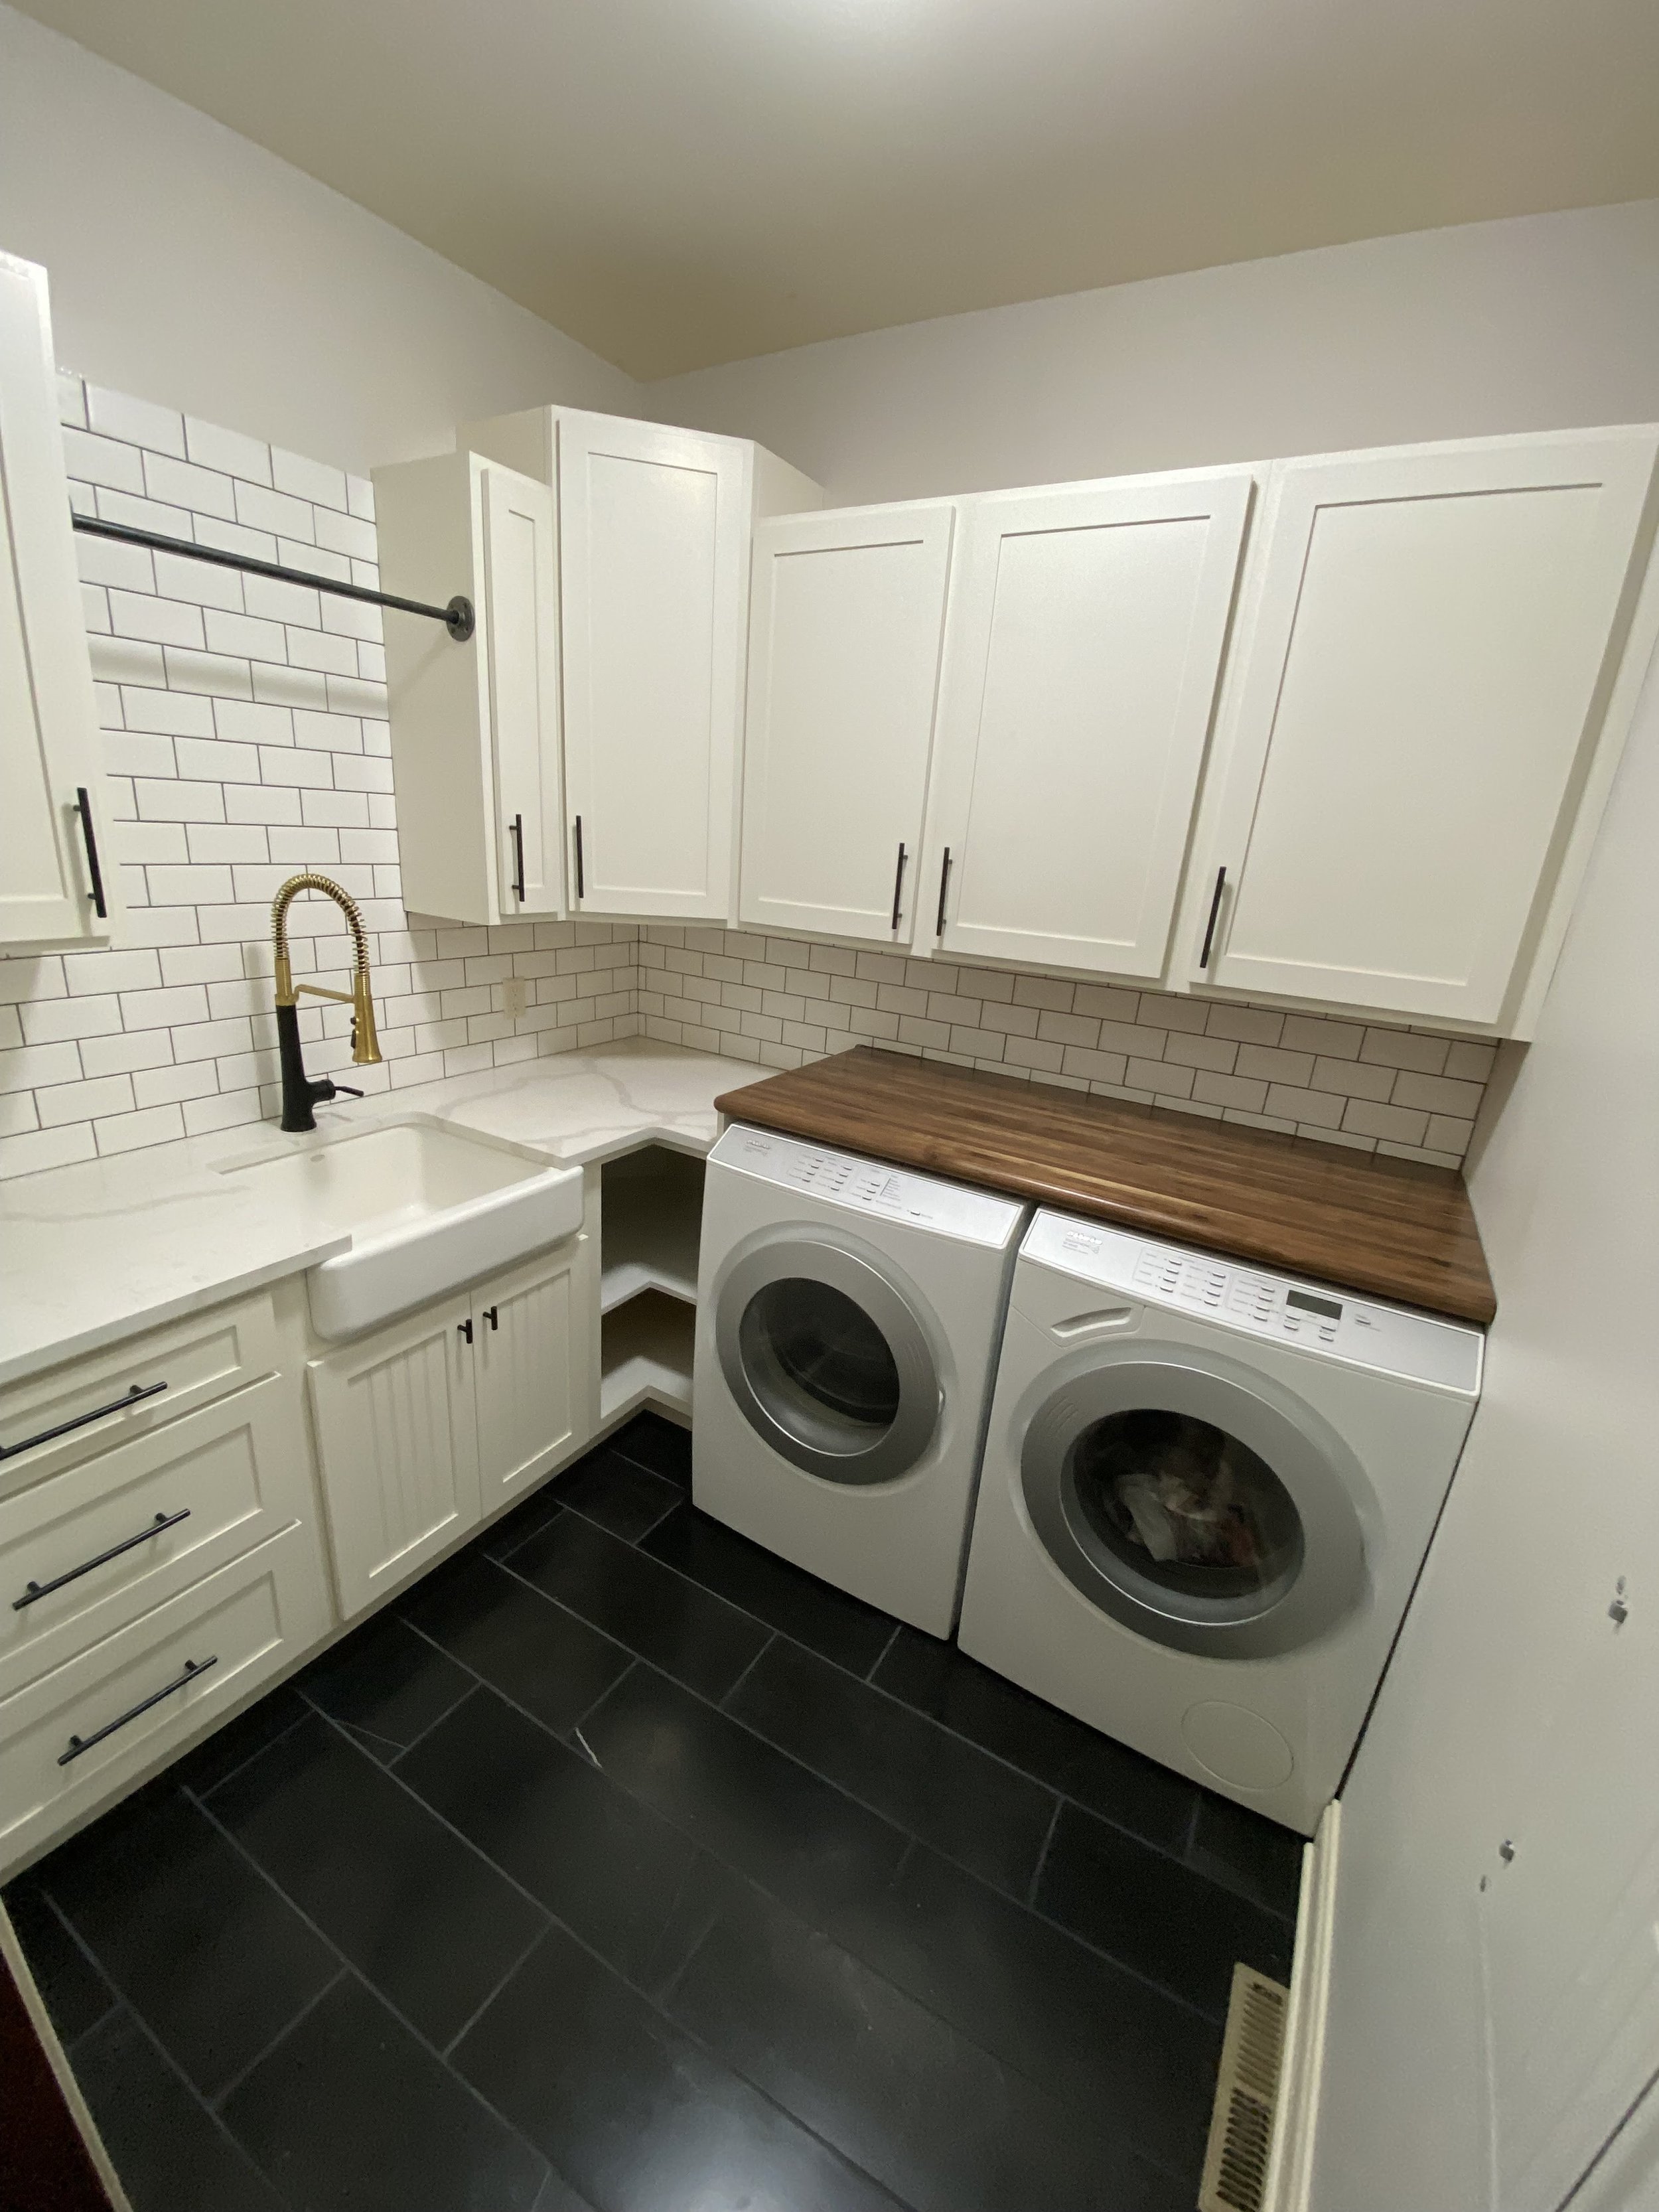 White laundry room with black tile floor